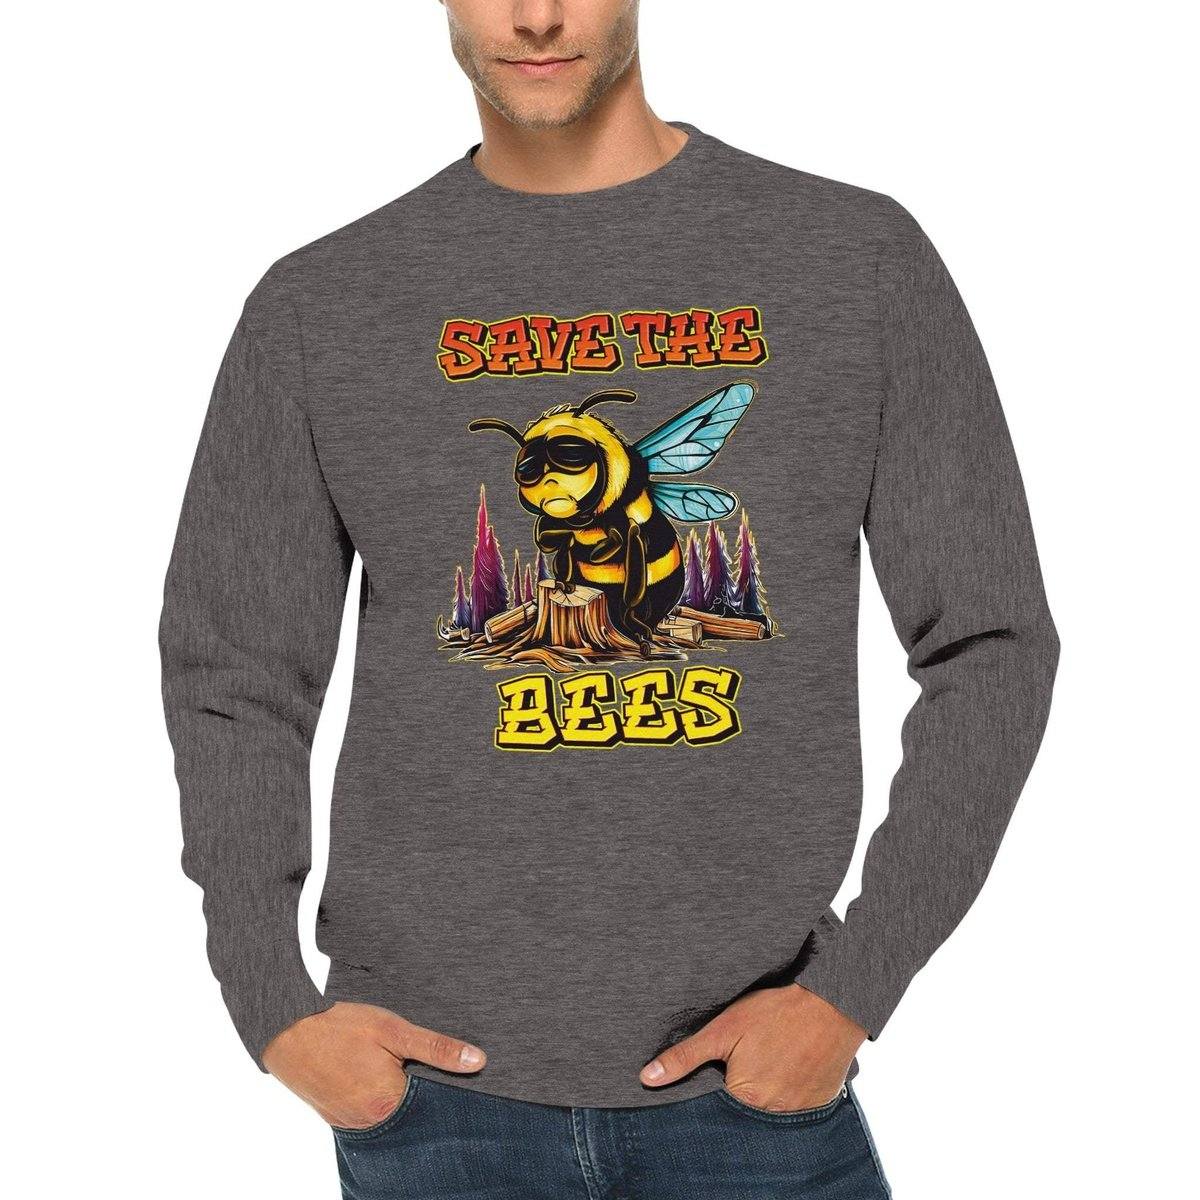 Save The Bees Jumper - Crying Bee - Premium Unisex Crewneck Sweatshirt Australia Online Color Charcoal Heather / S